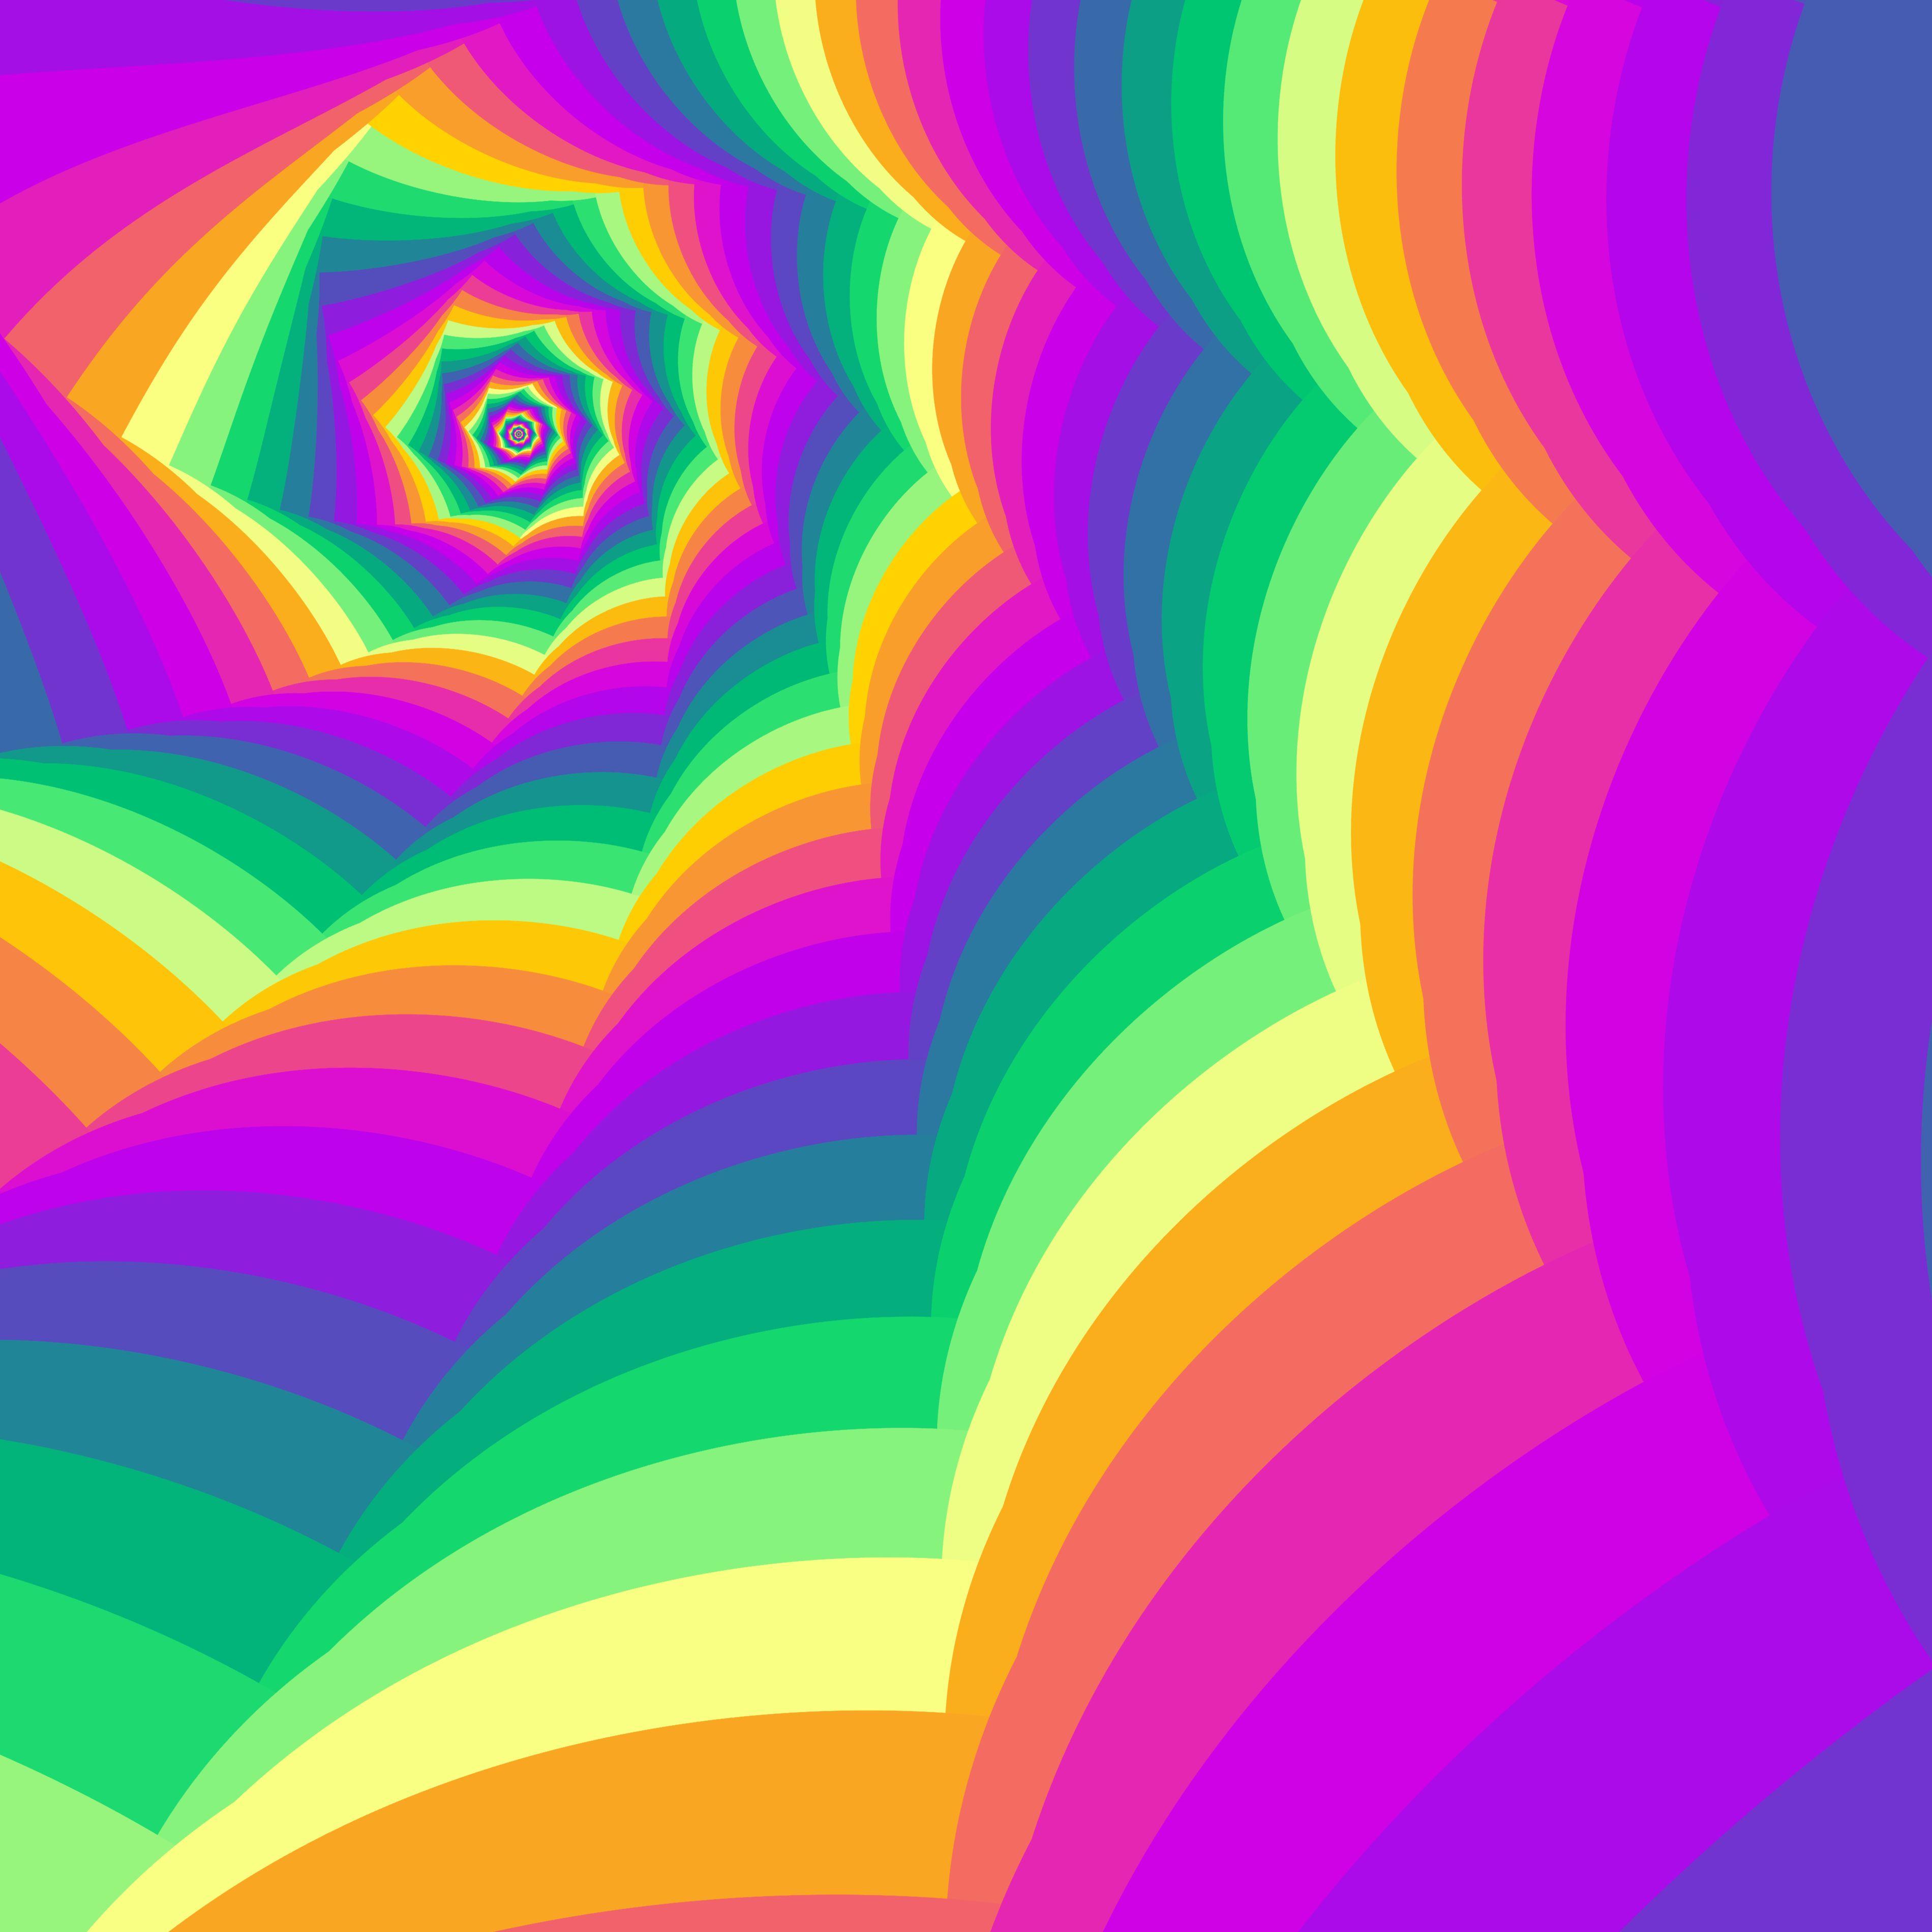 Free Stock Photo 1599-rainbow spiral | freeimageslive